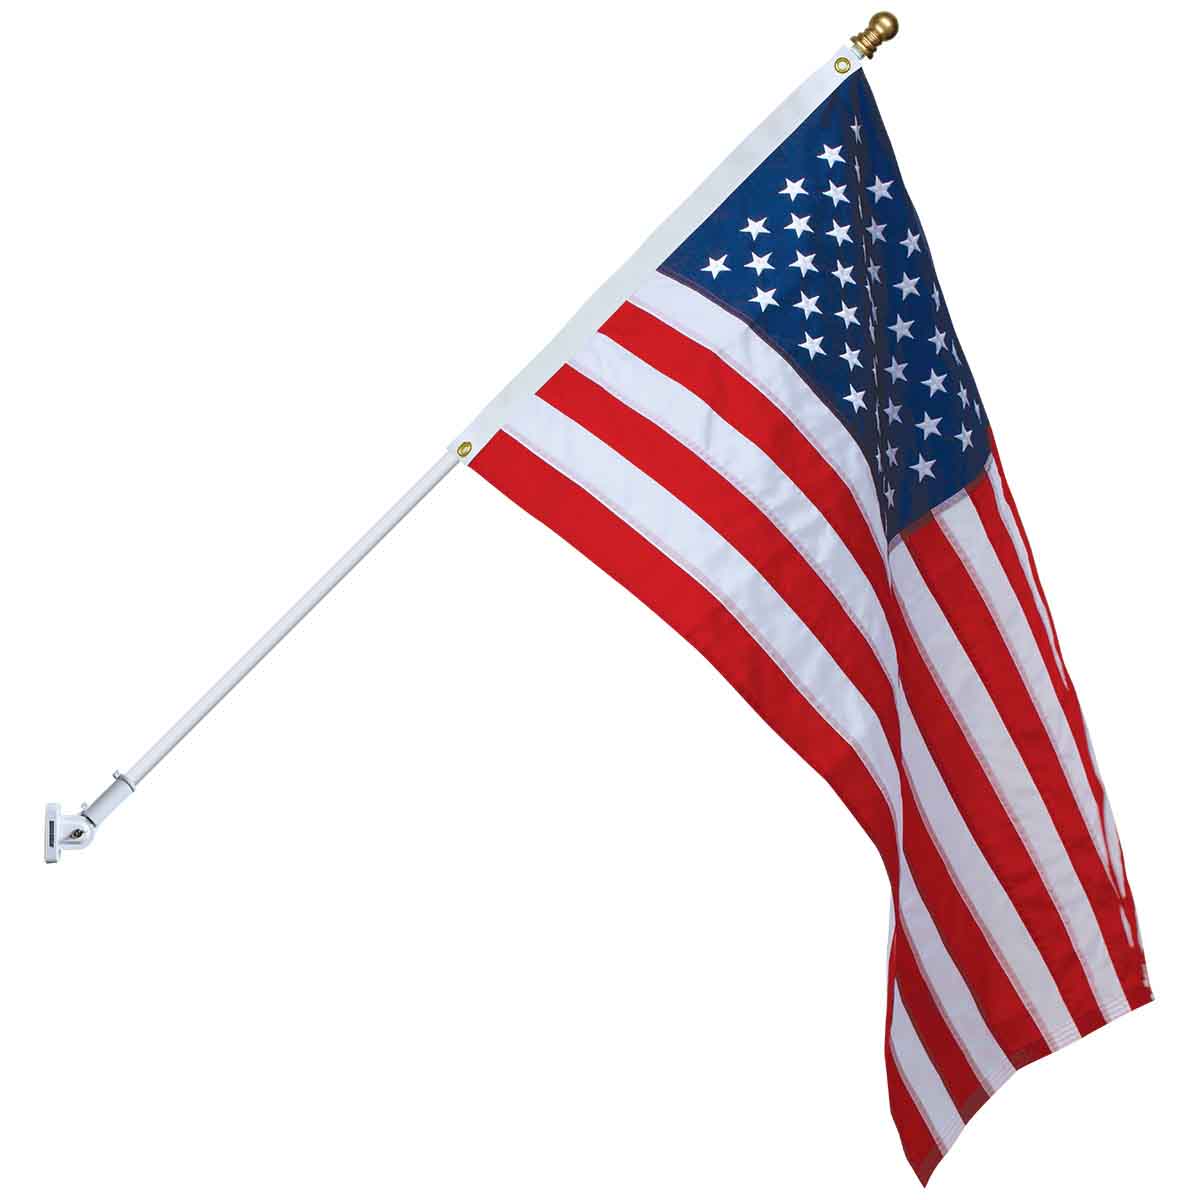 US Spinning Pole Flag Sets